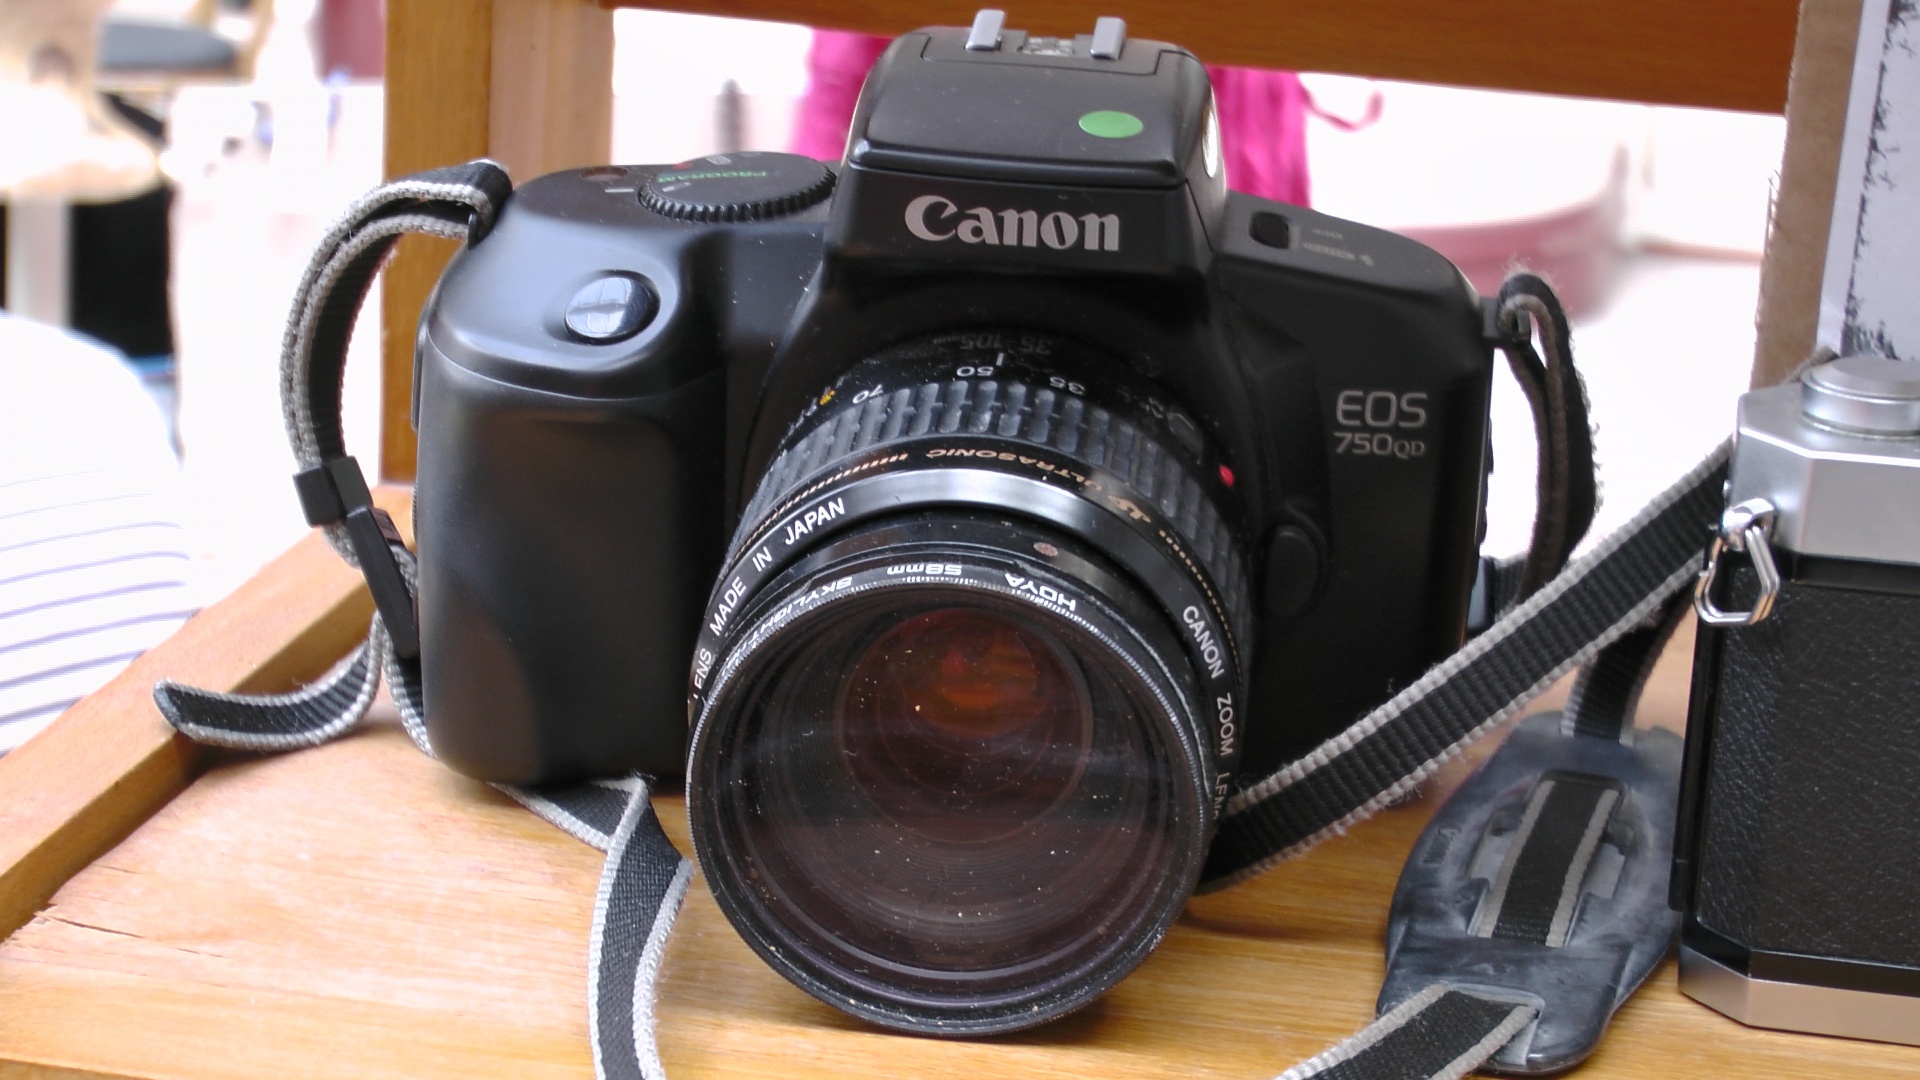 Canon EOS 750 QD 35mm Camera Free Stock Photo - Public Domain Pictures